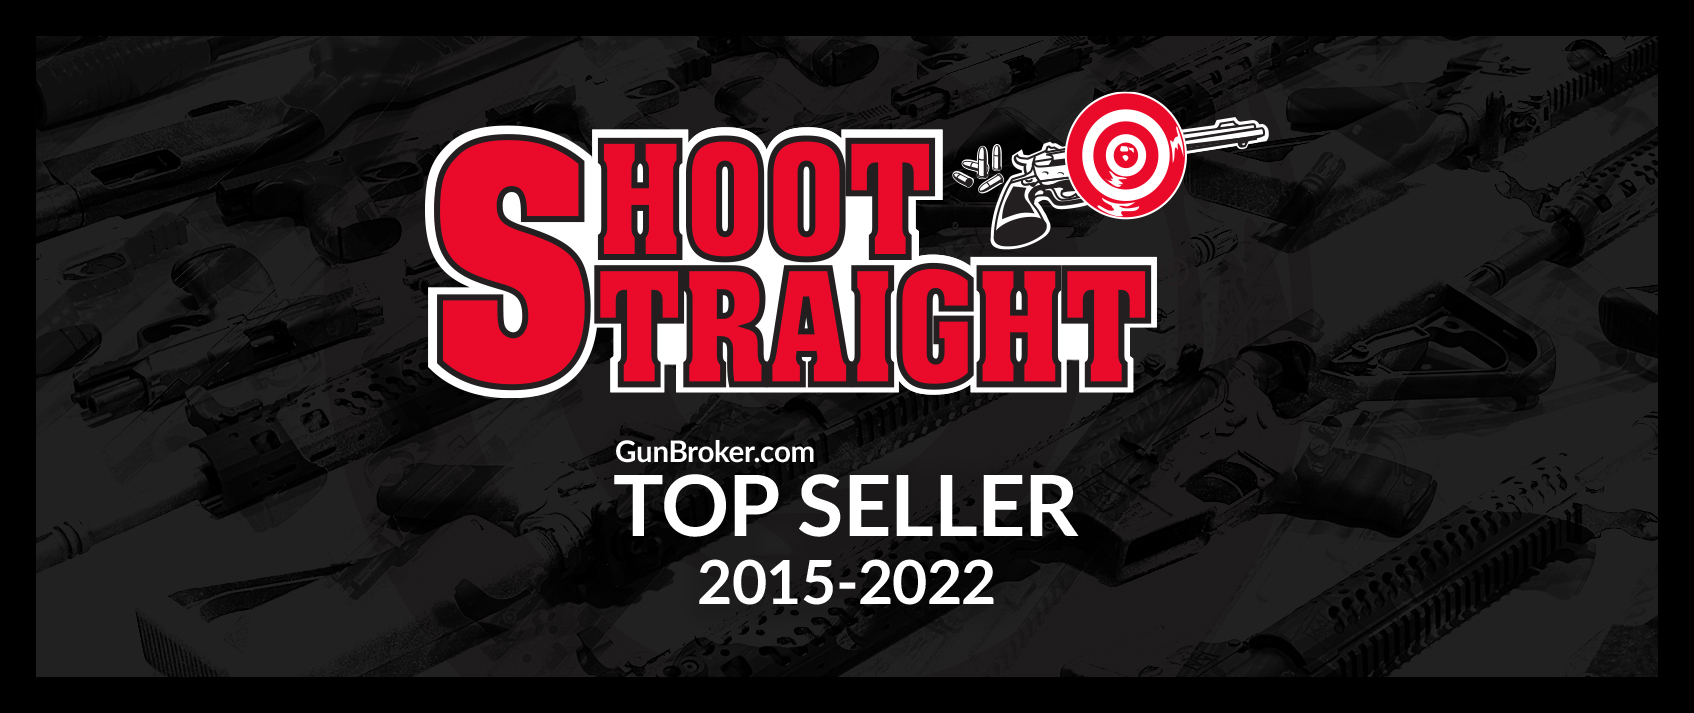 Shoot Straight Gunbroker banner